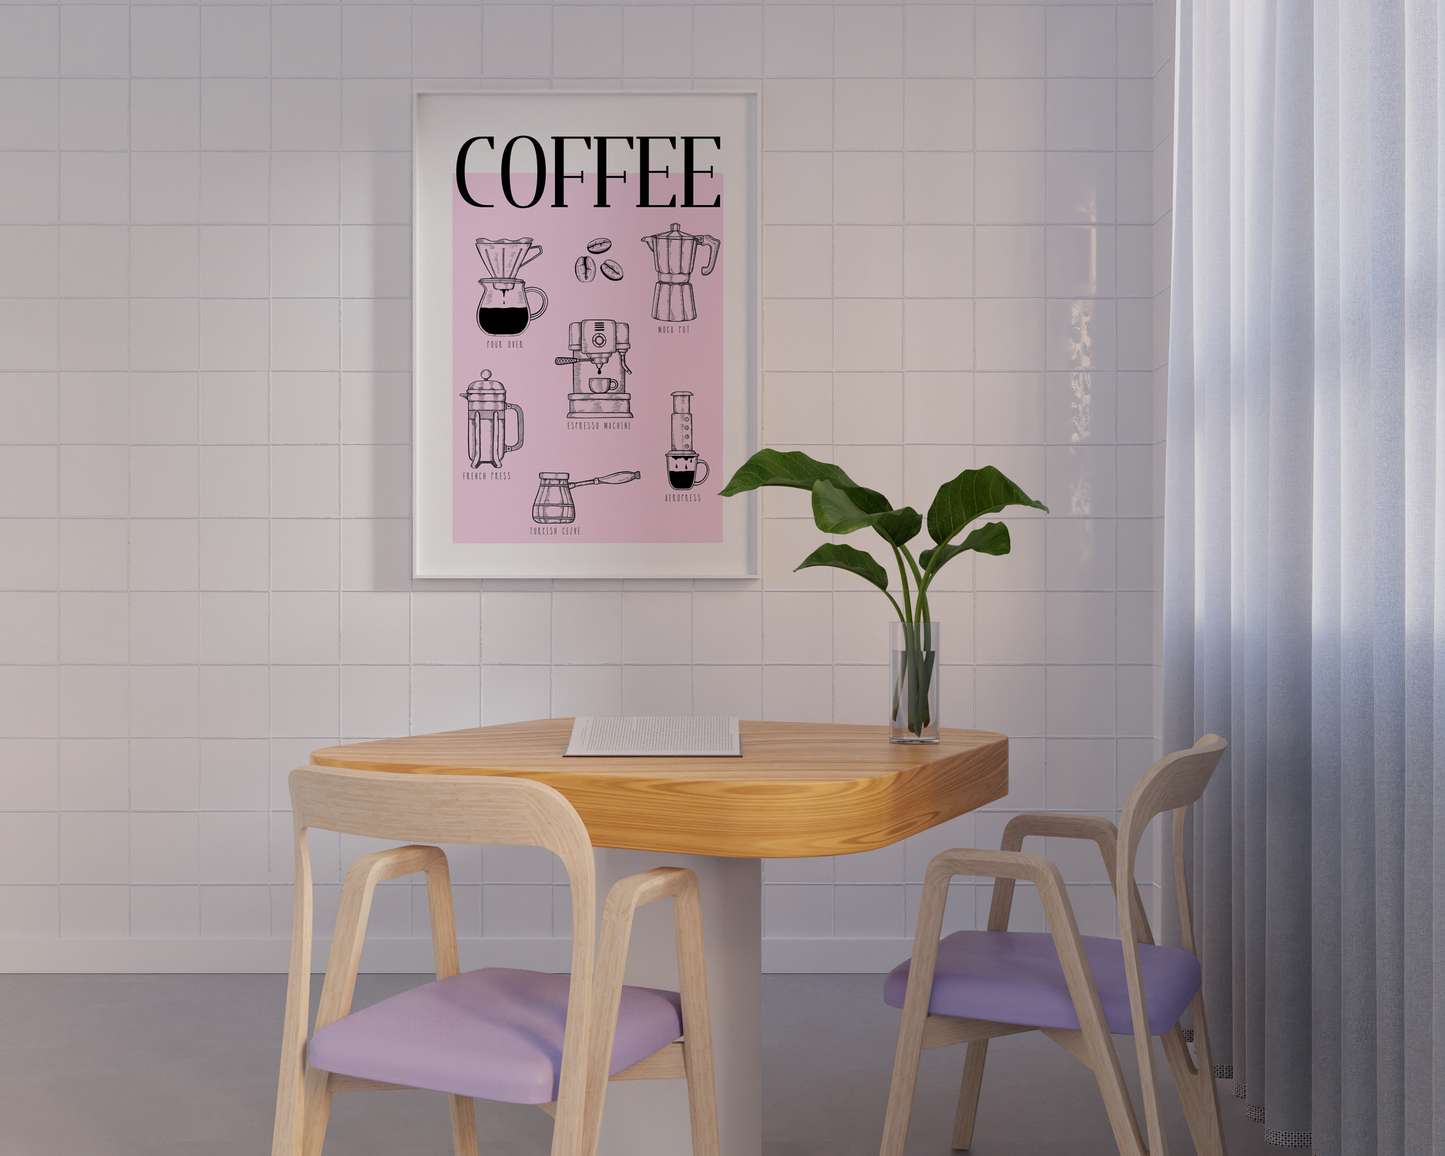 Coffee Brewing Methods Pink Poster